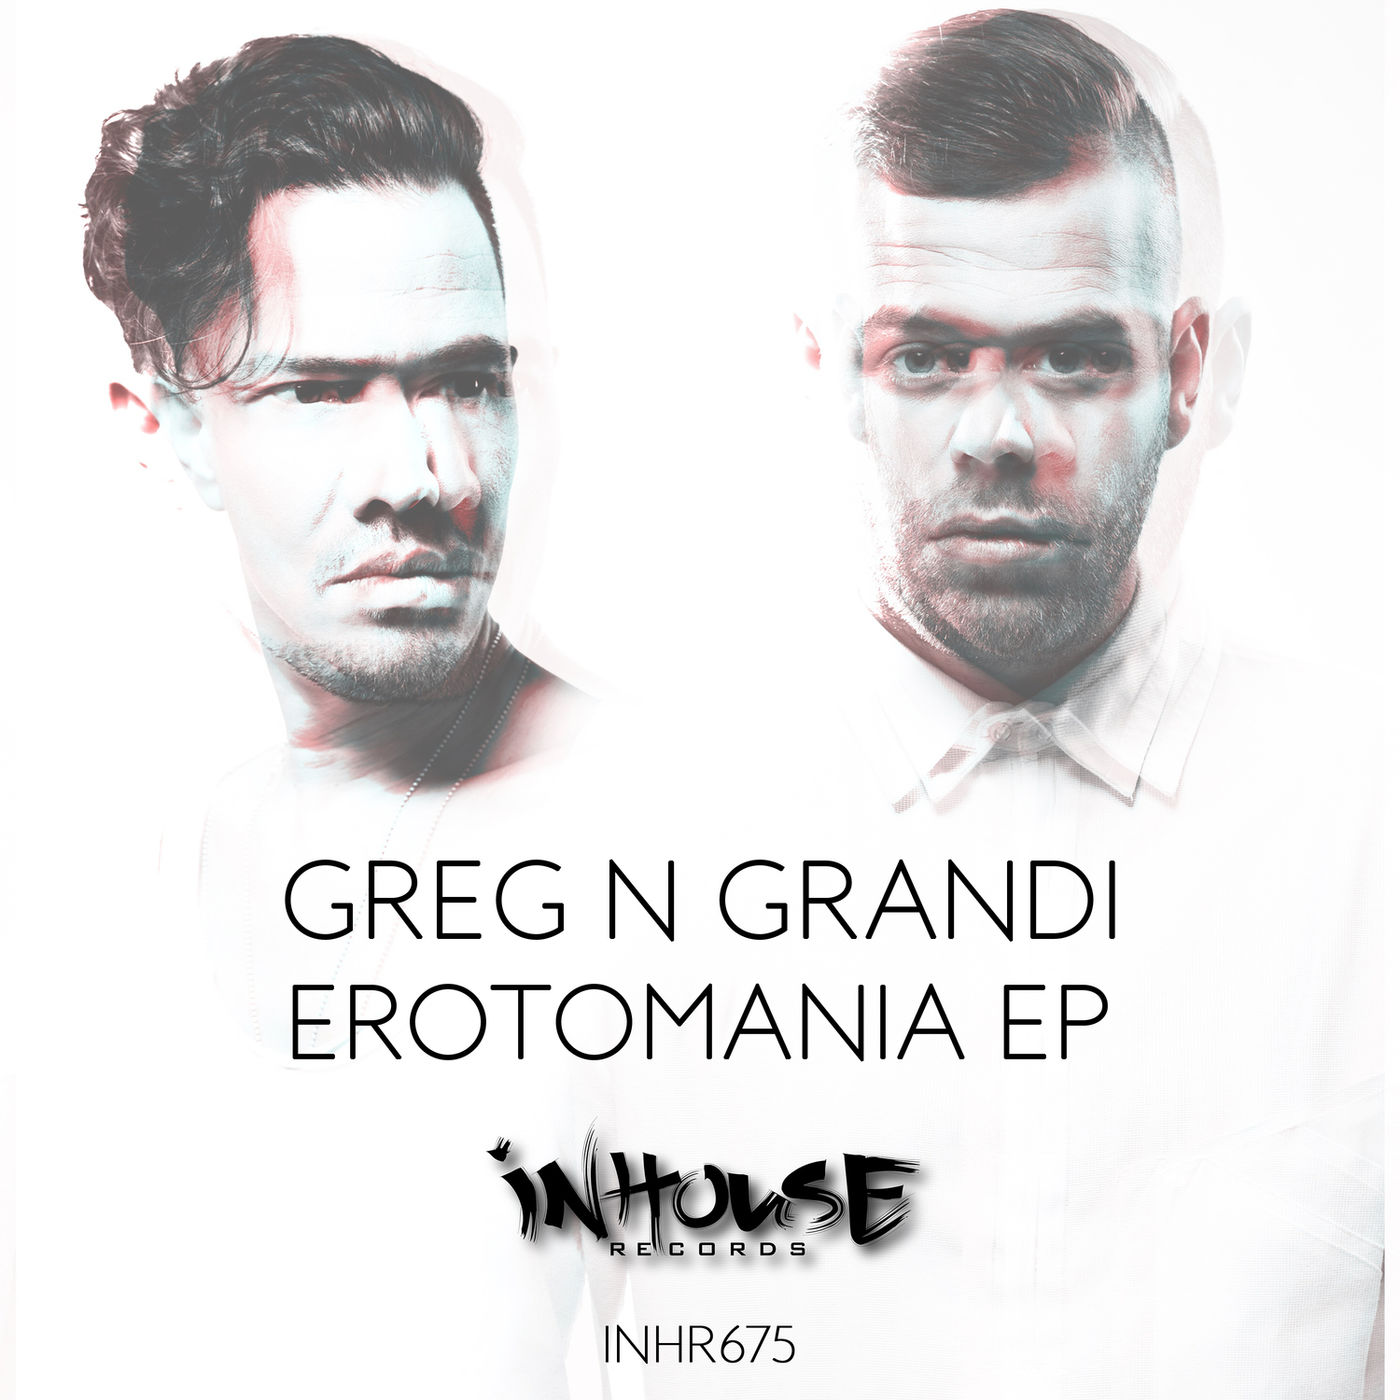 Greg N Grandi - Erotomania / InHouse Records